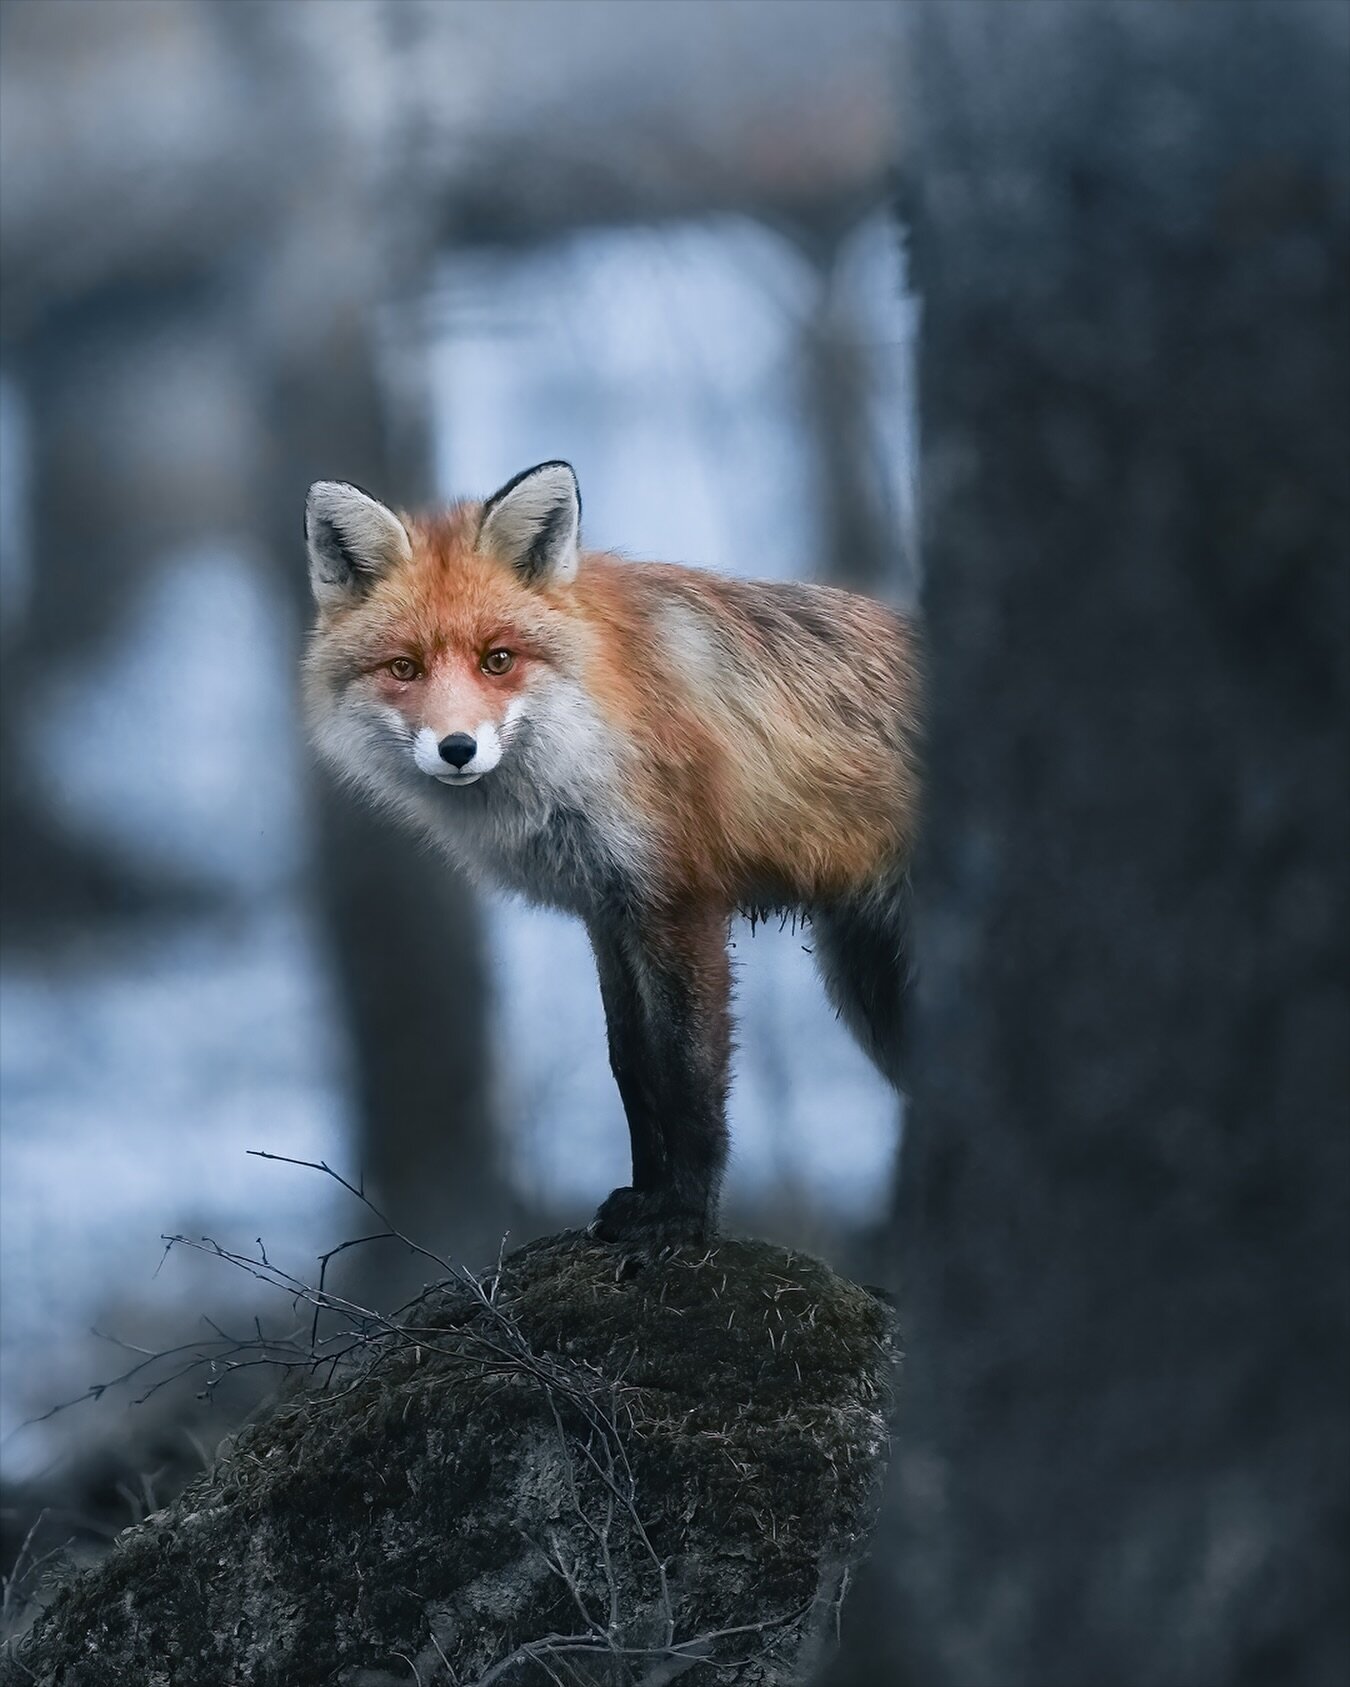 Curious fox peeks behind the tree in the woods 🦊 ⁣
.⁣
.⁣
.⁣
.⁣
.⁣
#animal #fuchs #vulpesvulpes #renard #foxlove #foxhead #wildlifephotography #foxesofig #foxes #fox #wildlife_perfection #naturelover #foxesofinstagram #redfox #wildlifeplanet #wildlif